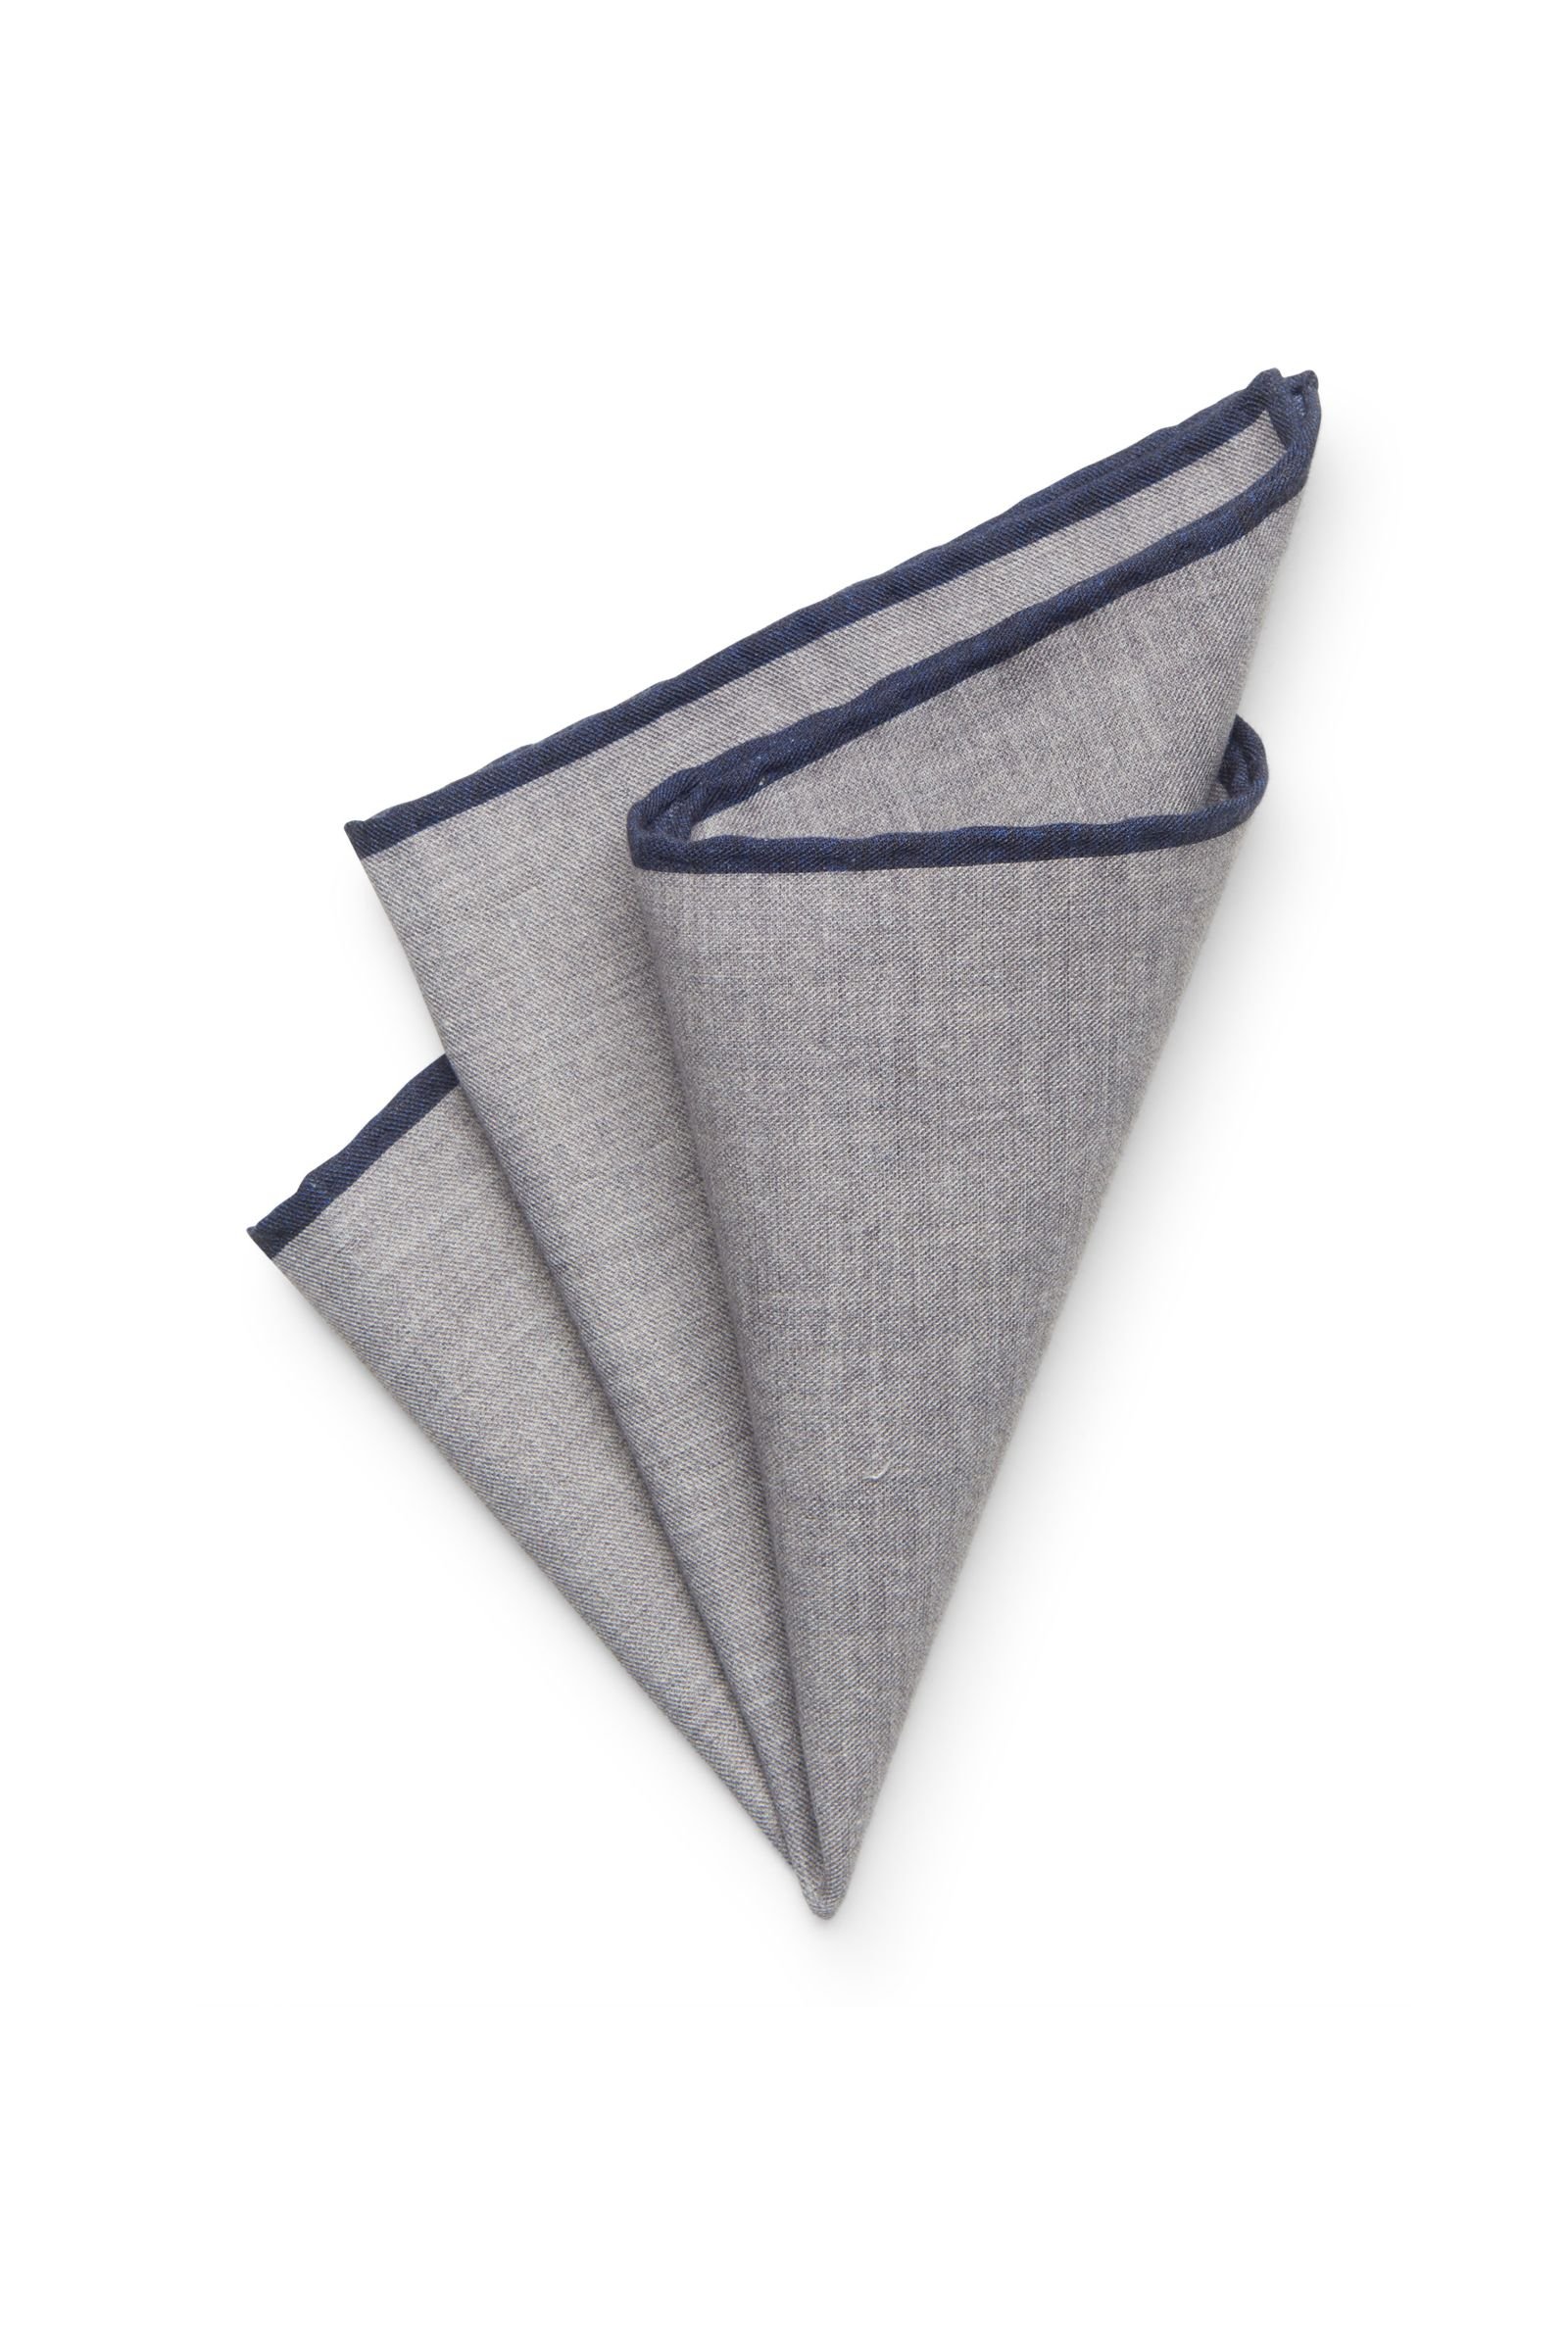 Pocket square grey/grey-blue